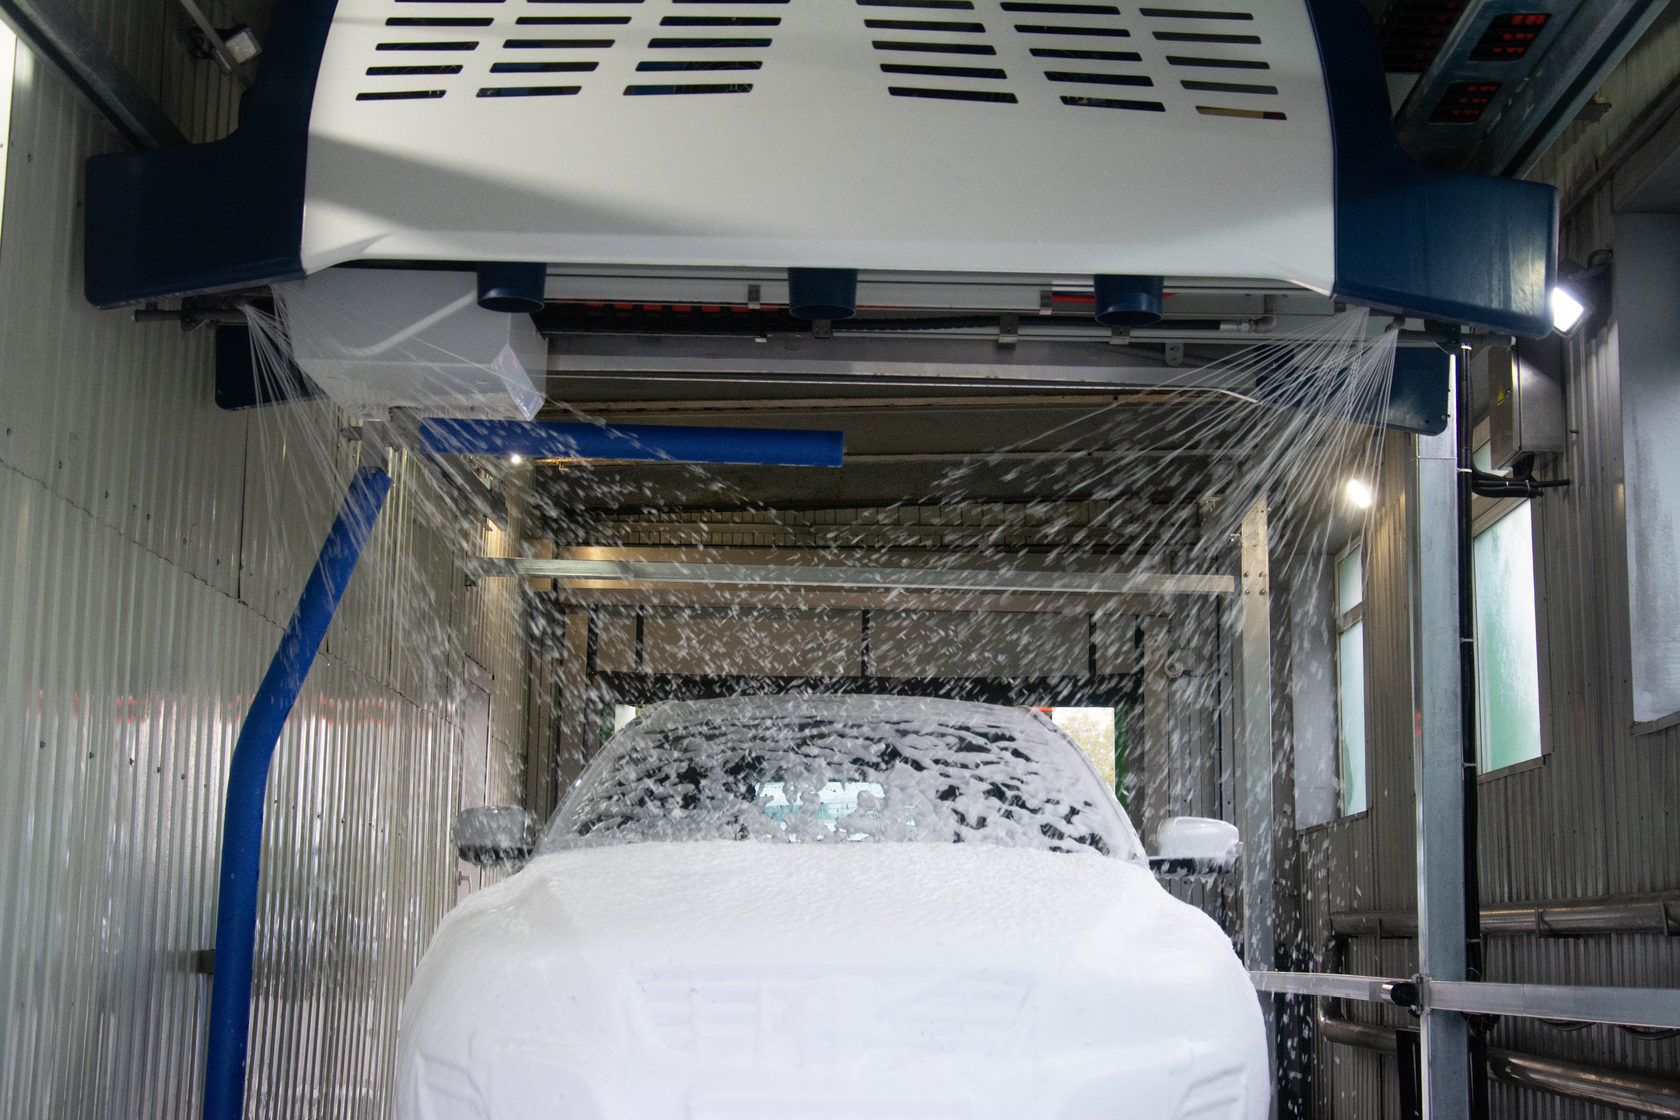 Tesla In Automatic Car Wash